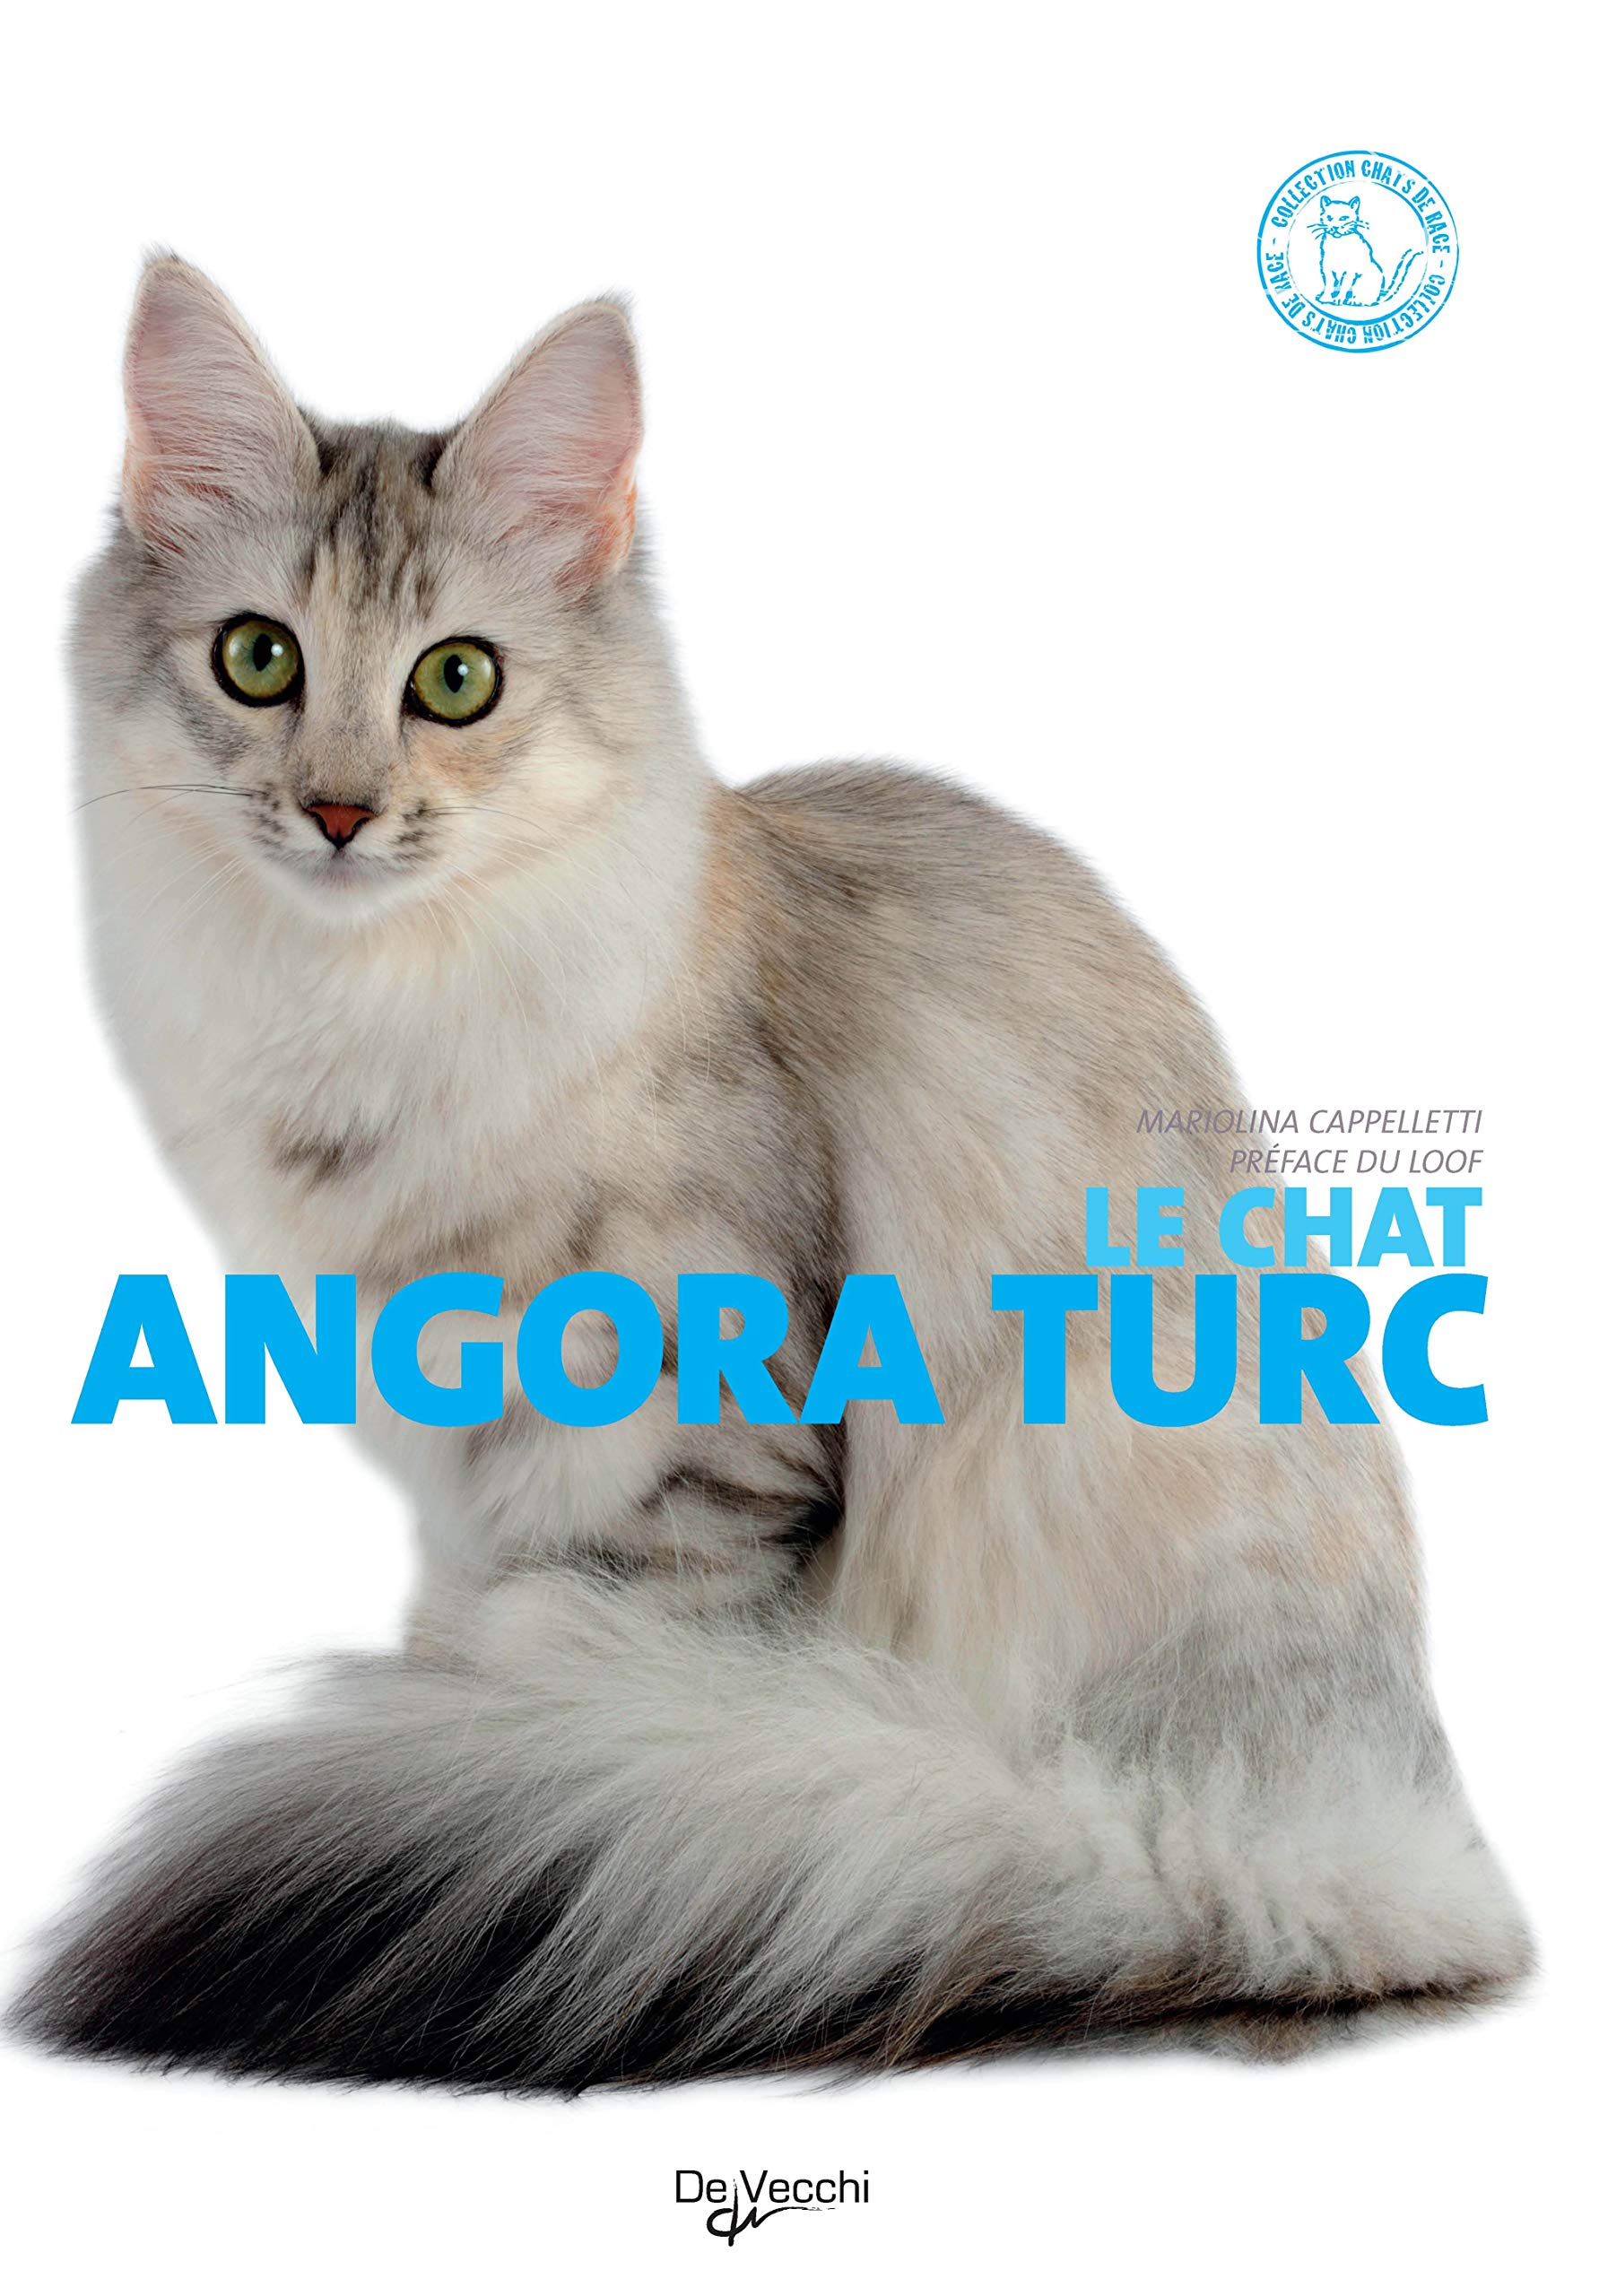 Le chat angora turc - Mariolina Cappelletti